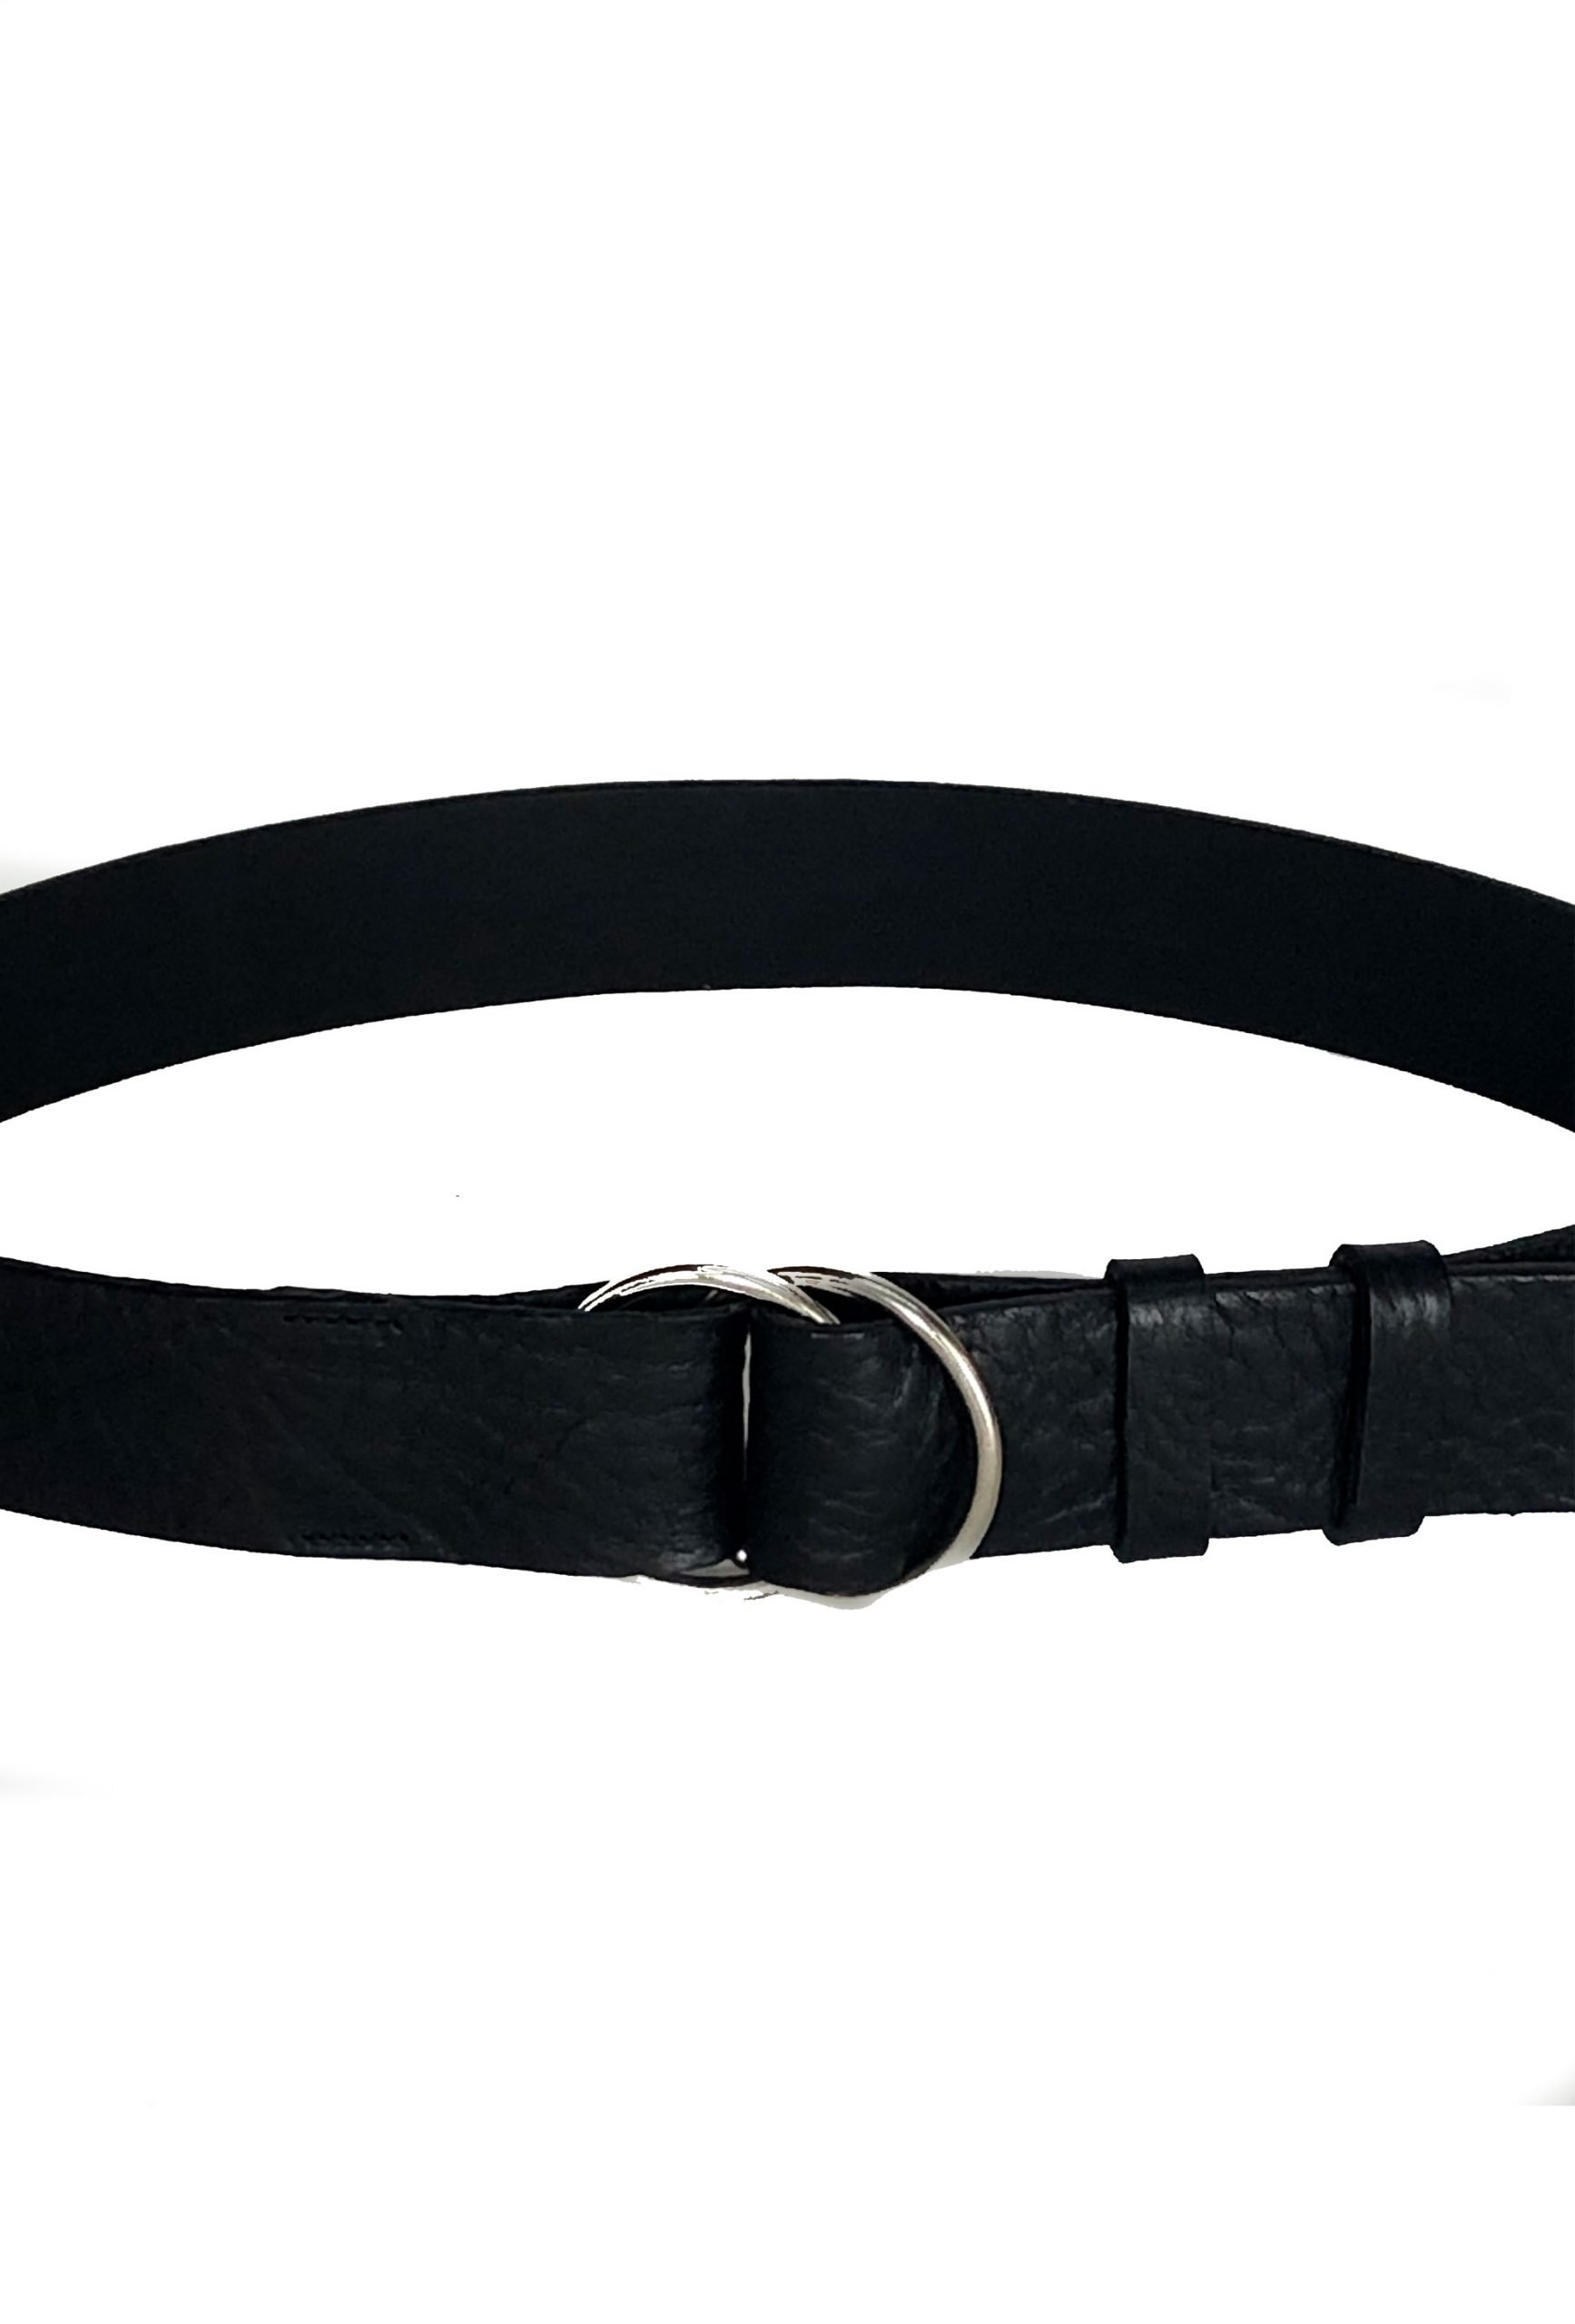 cinturon-dobleo-negro-cuero-leather-belt-custom-anillas-mujer-a-medida